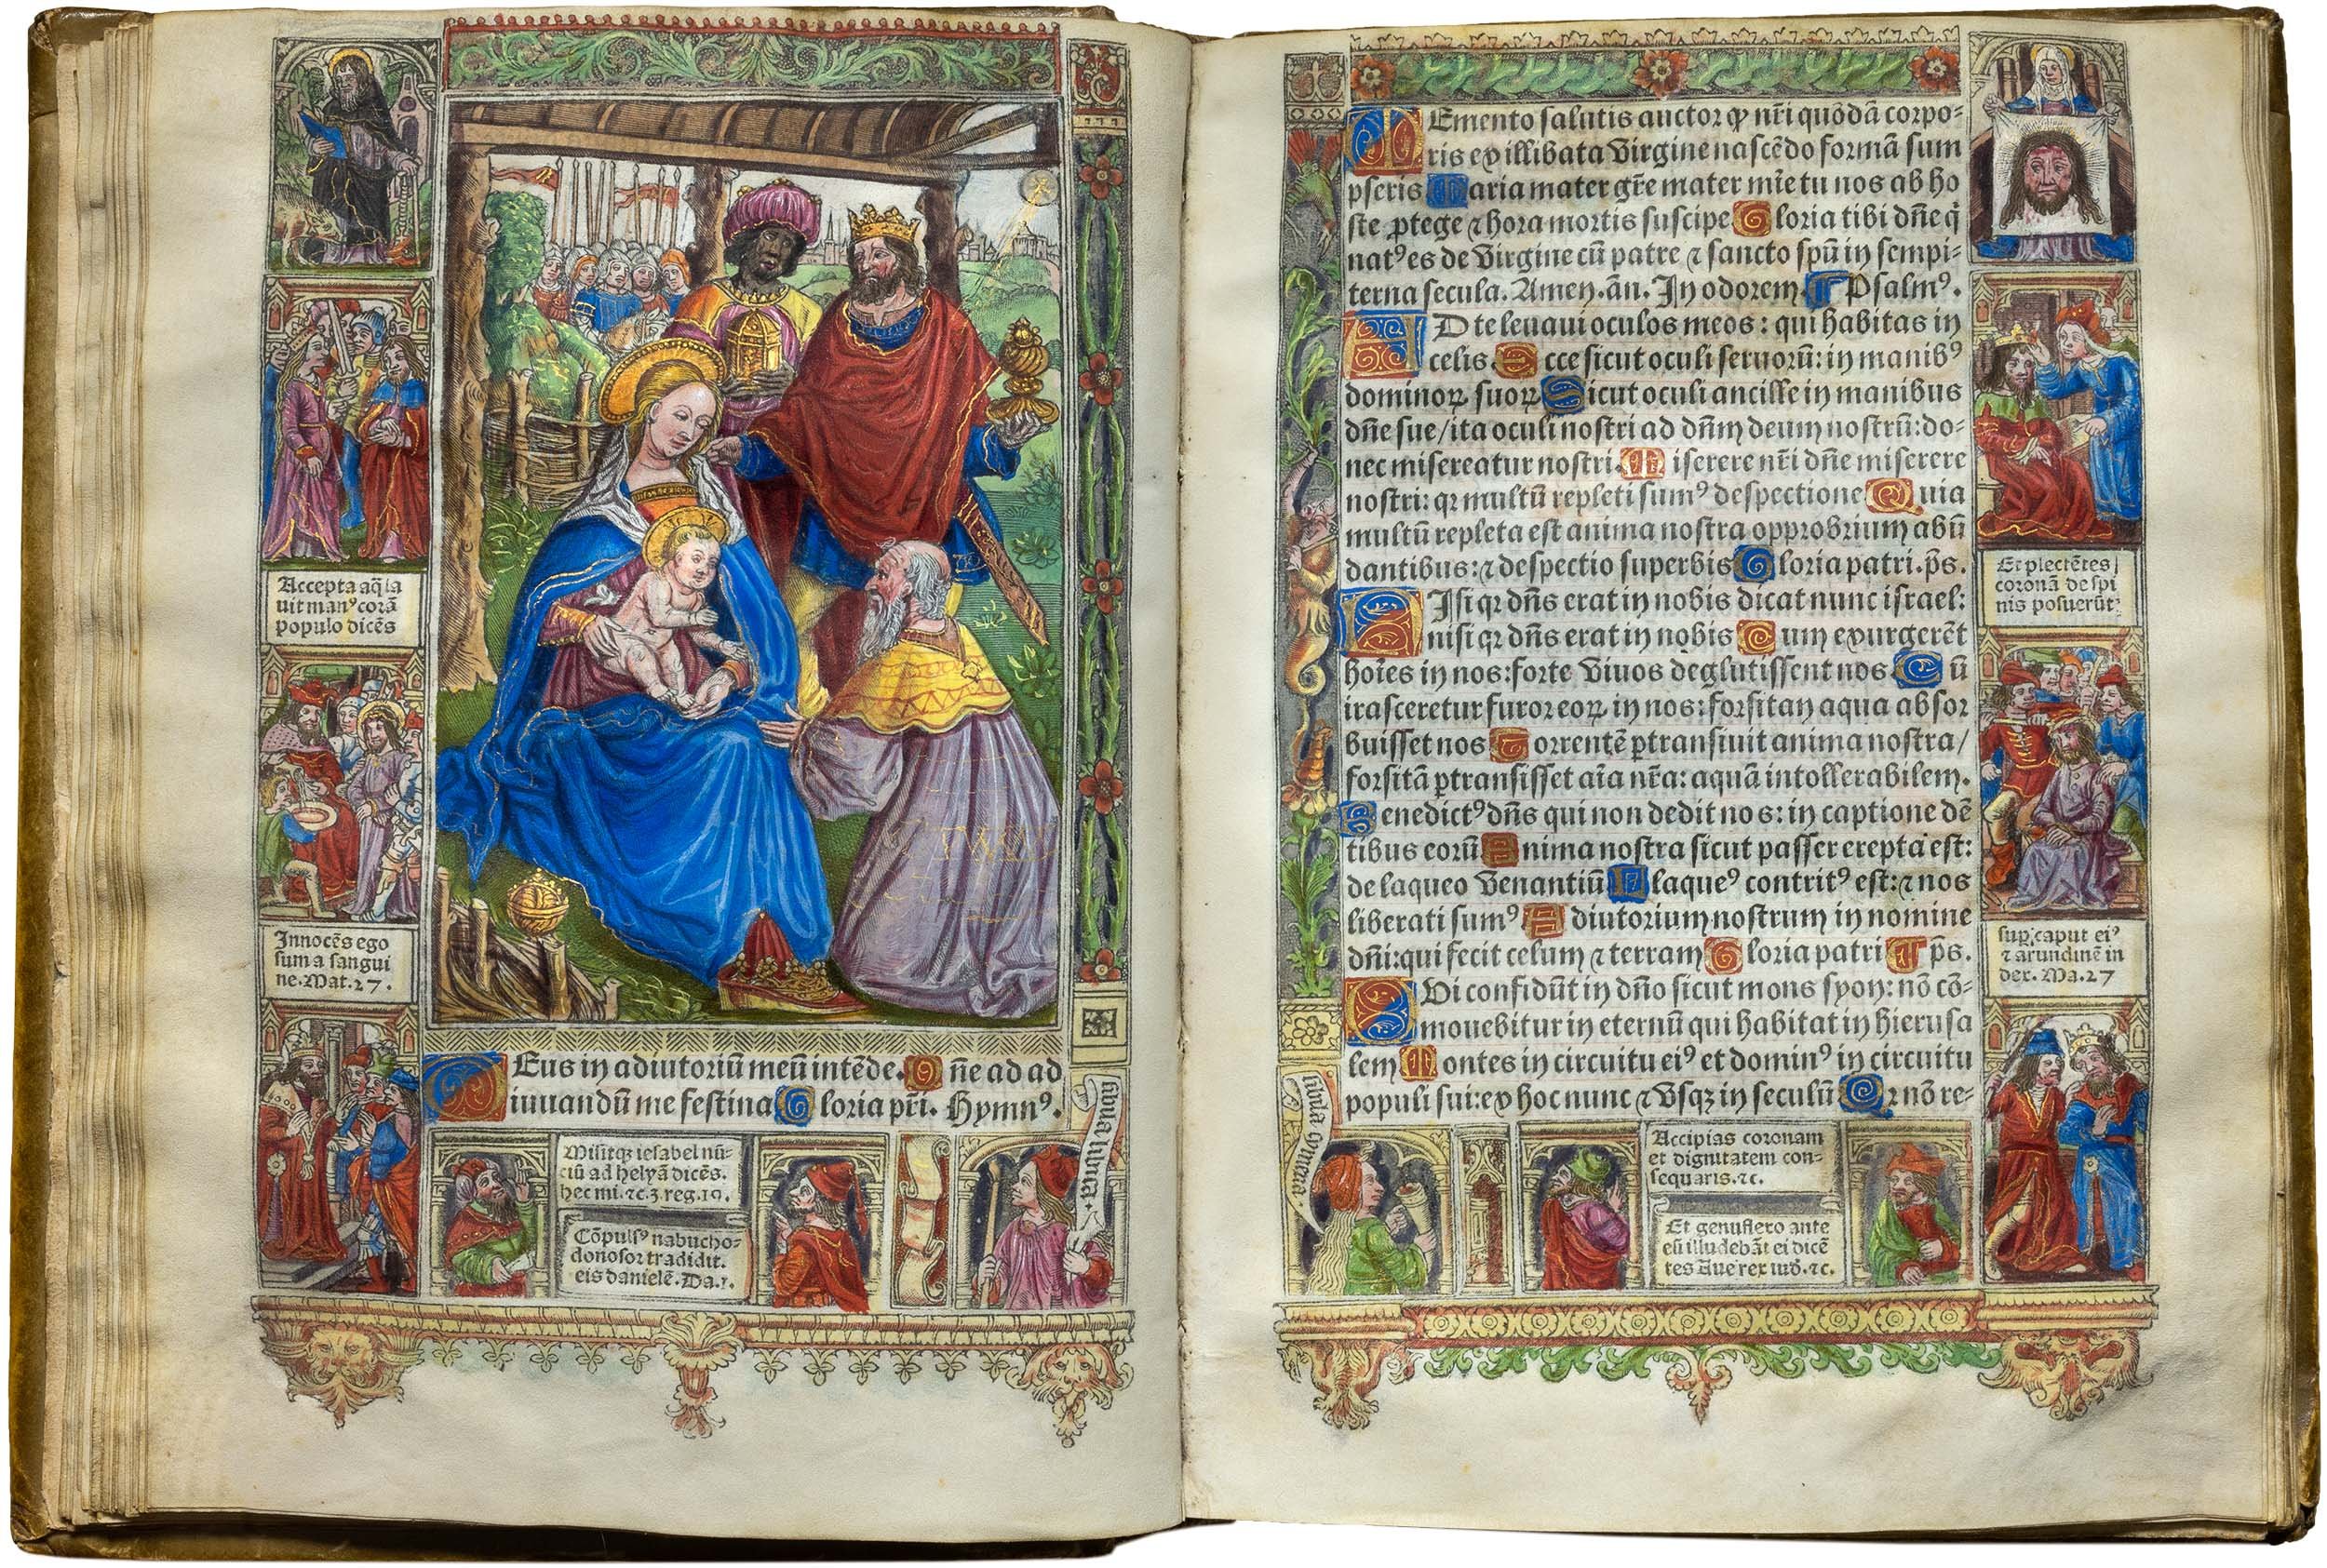 Horae-bmv-31-march-1511-kerver-printed-book-of-hours-illuminated-copy-vellum-33.jpg